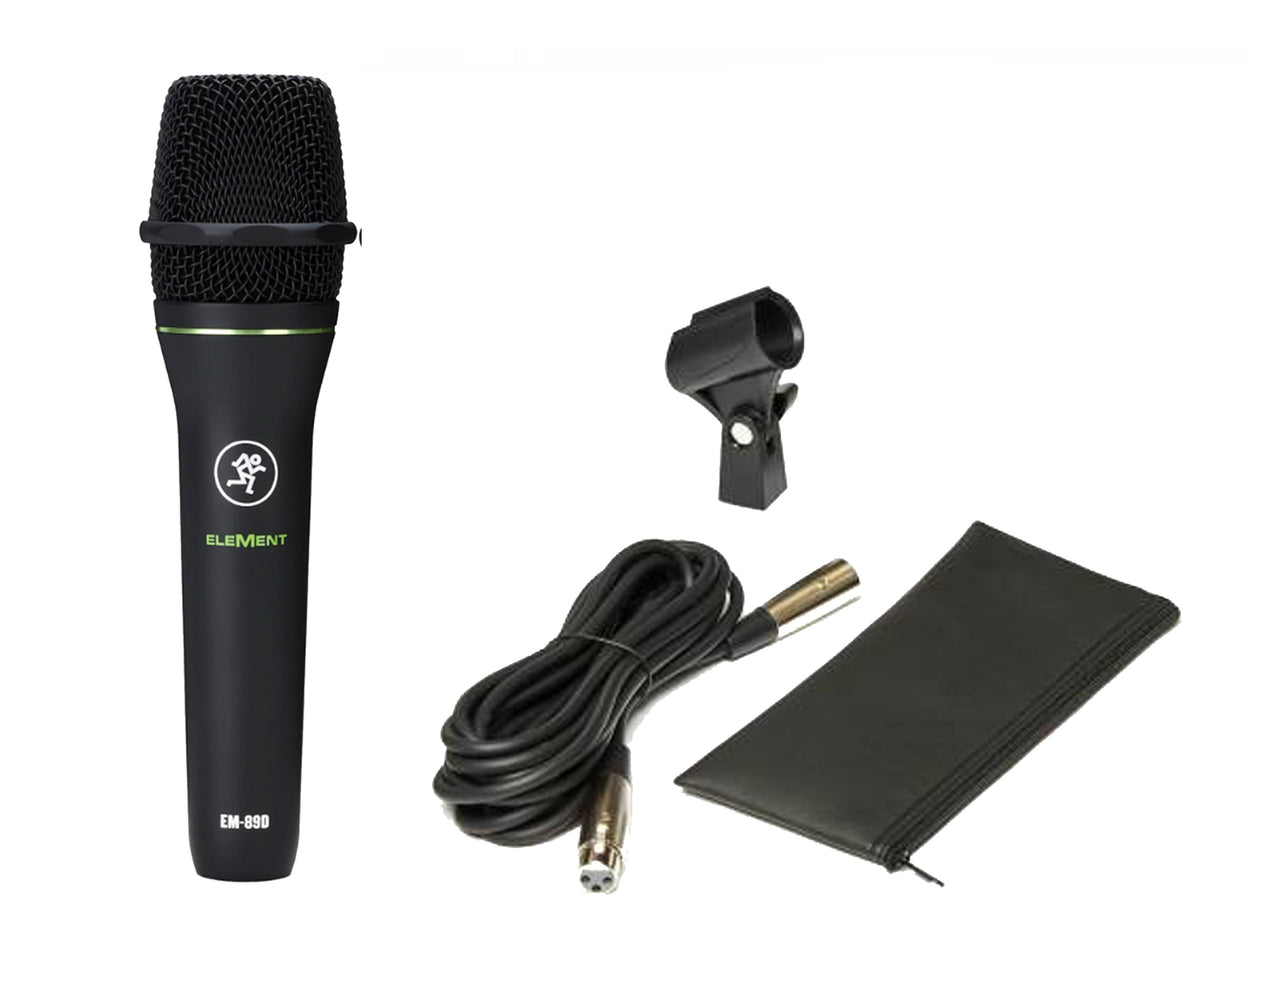 Mackie Thump GO 8" Portable Battery-Powered Loudspeaker+Free Mackie Microphone EM89D